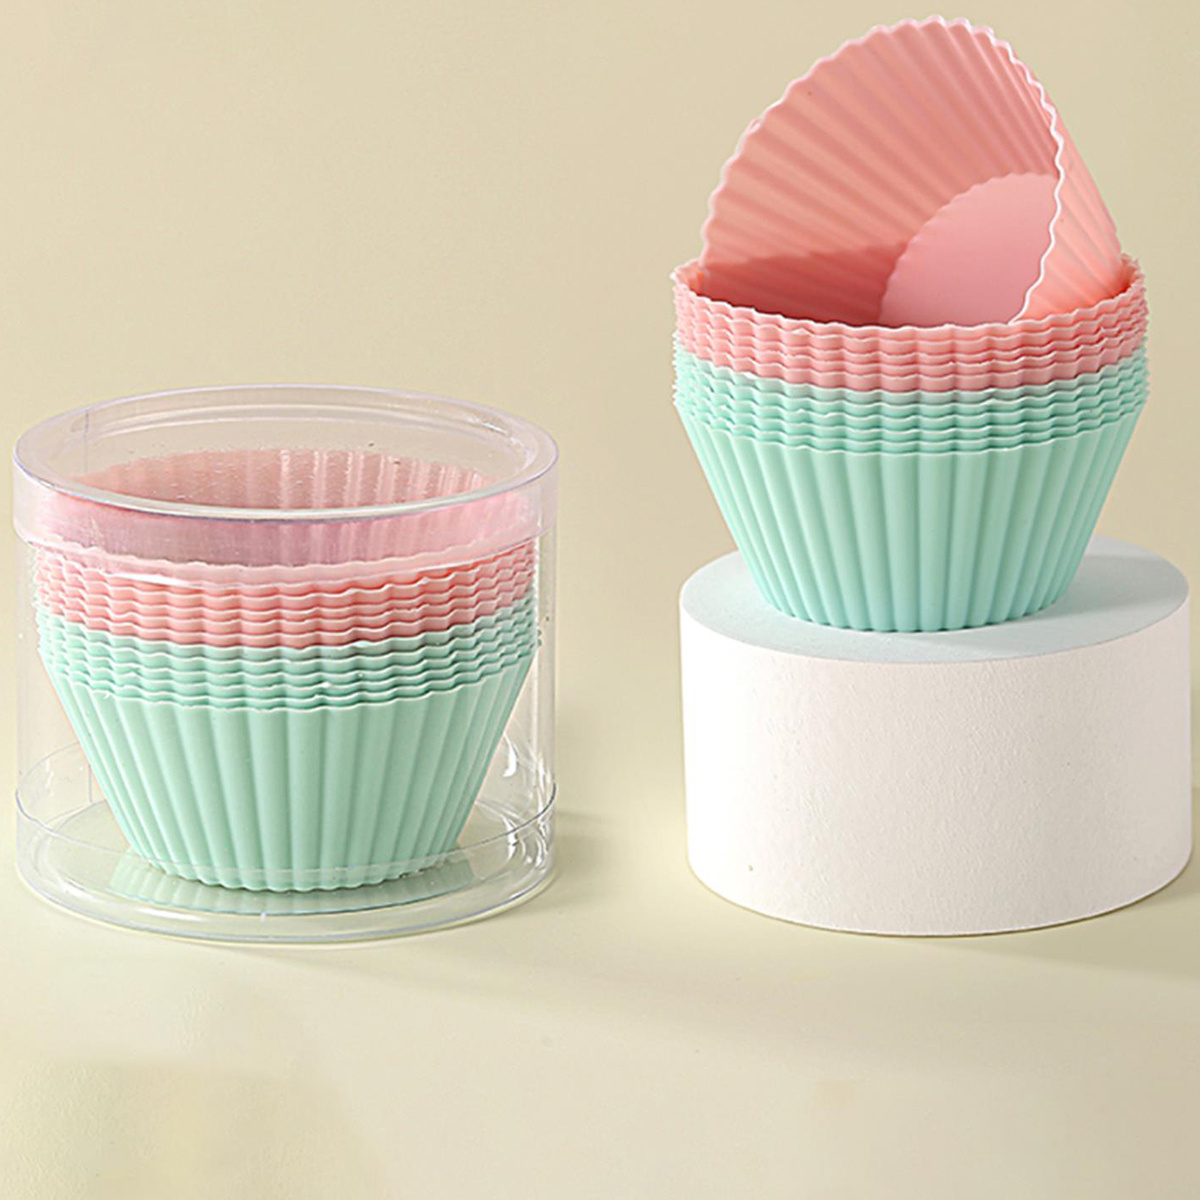 LetGoShop Silicone Cupcake Liners Reusable Baking Cups Nonstick